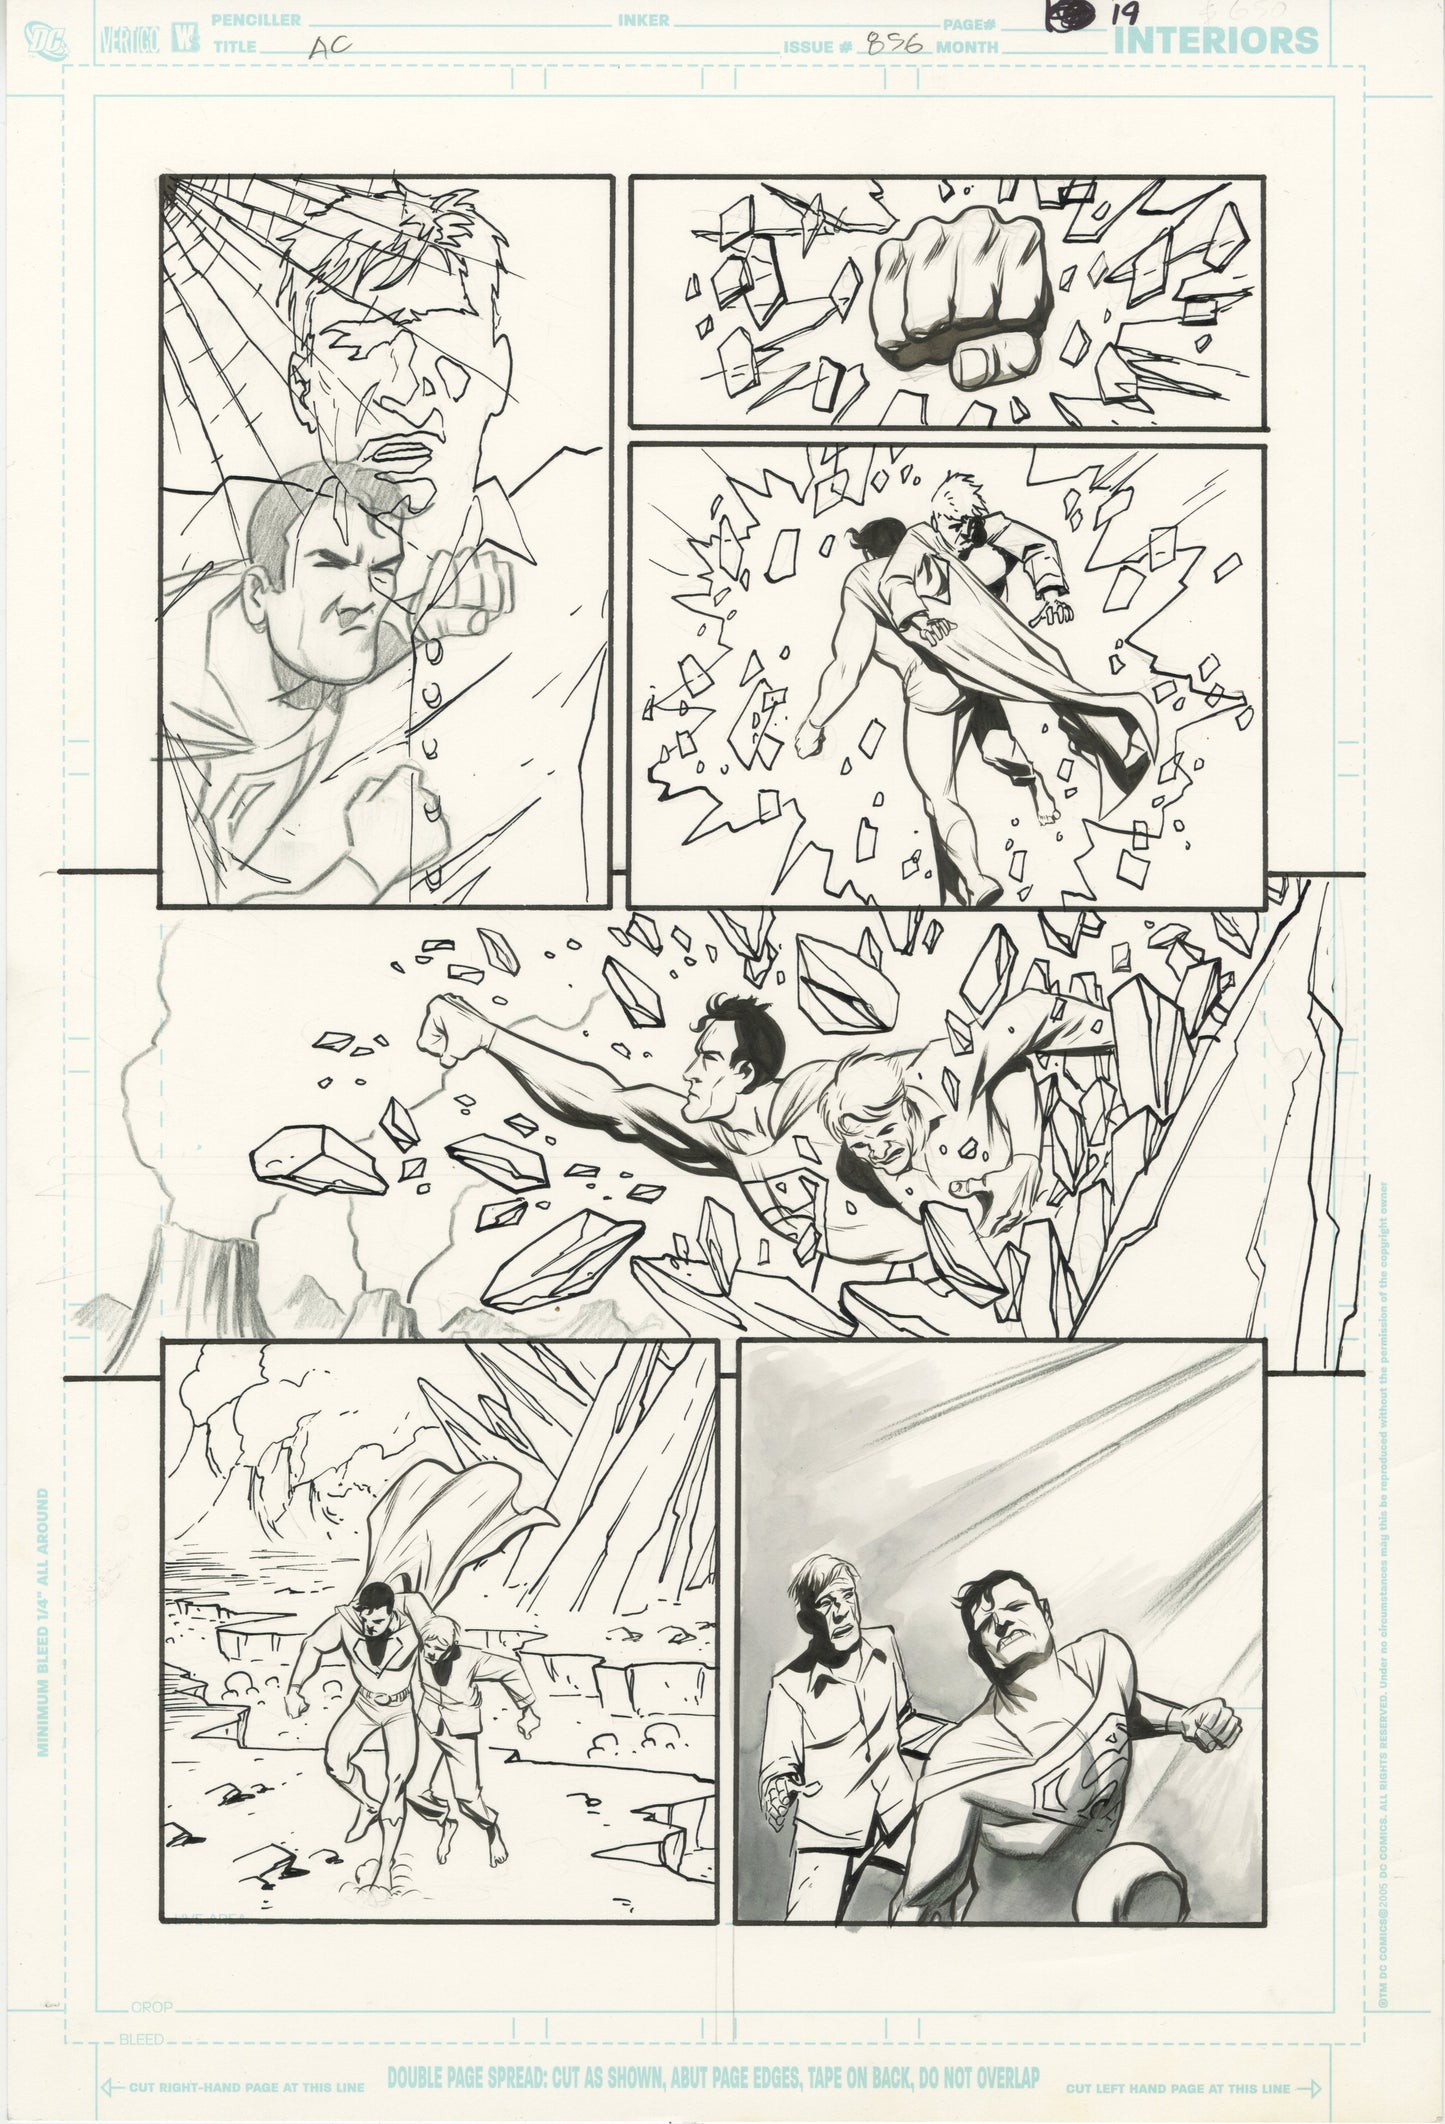 Action Comics #855, Page #19 (2007 DC,Superman: Escape From Bizarro World)